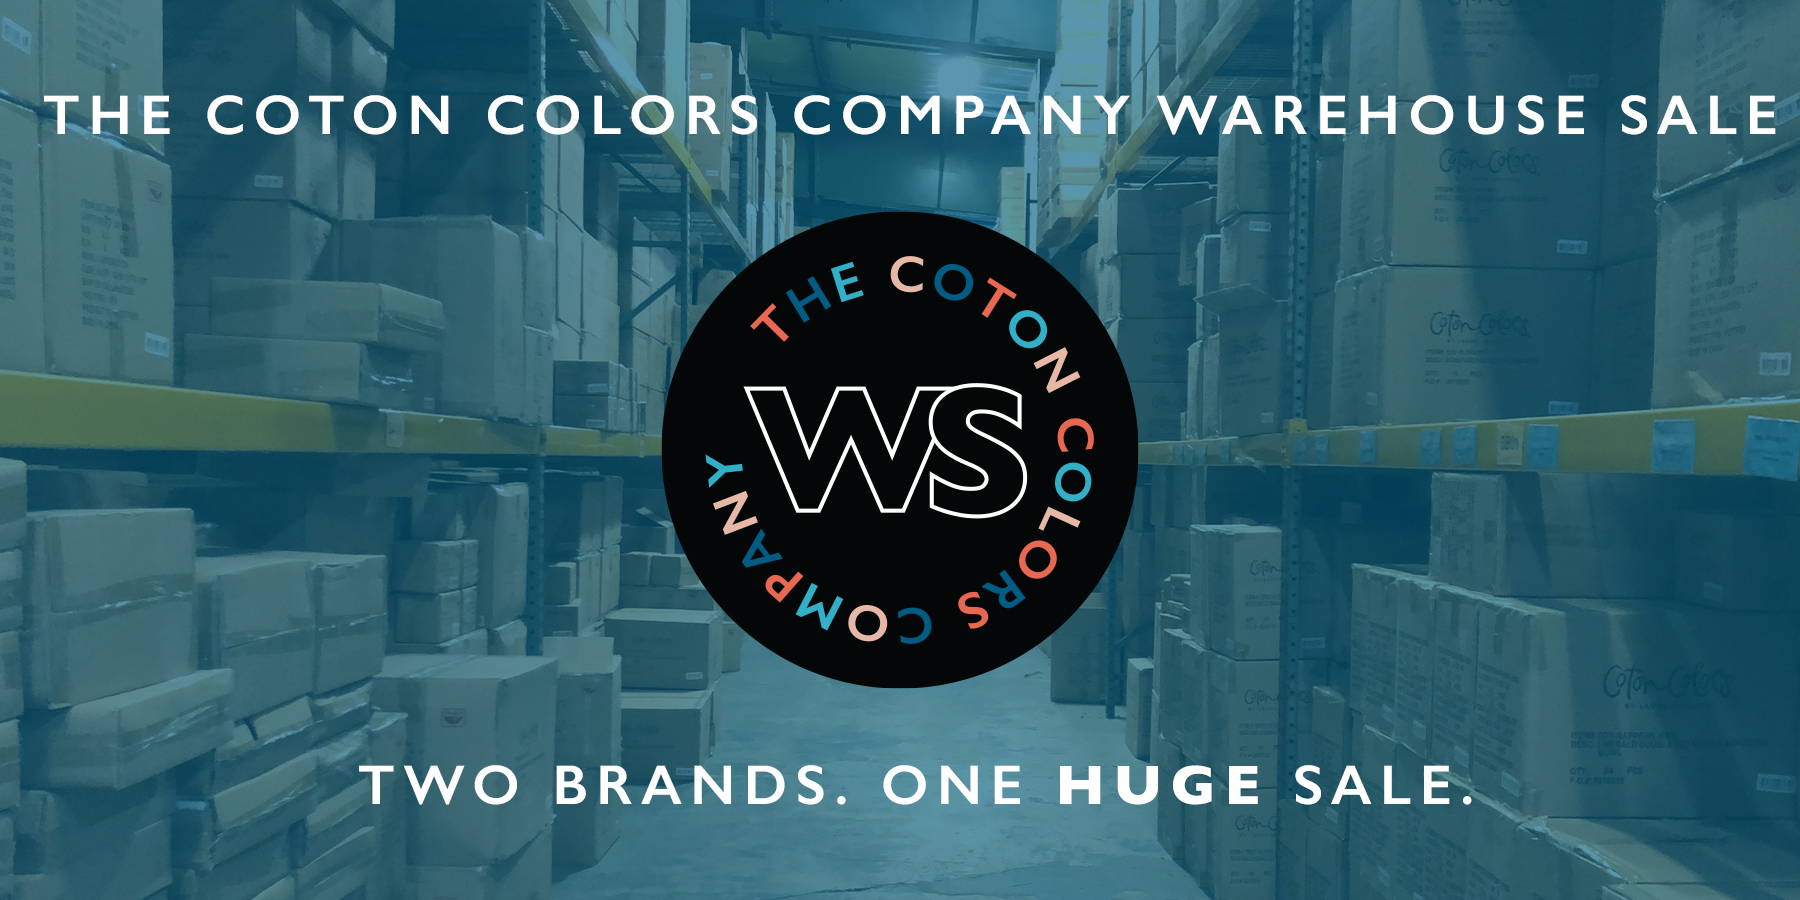 Warehouse Sale Coton Colors by Laura Johnson